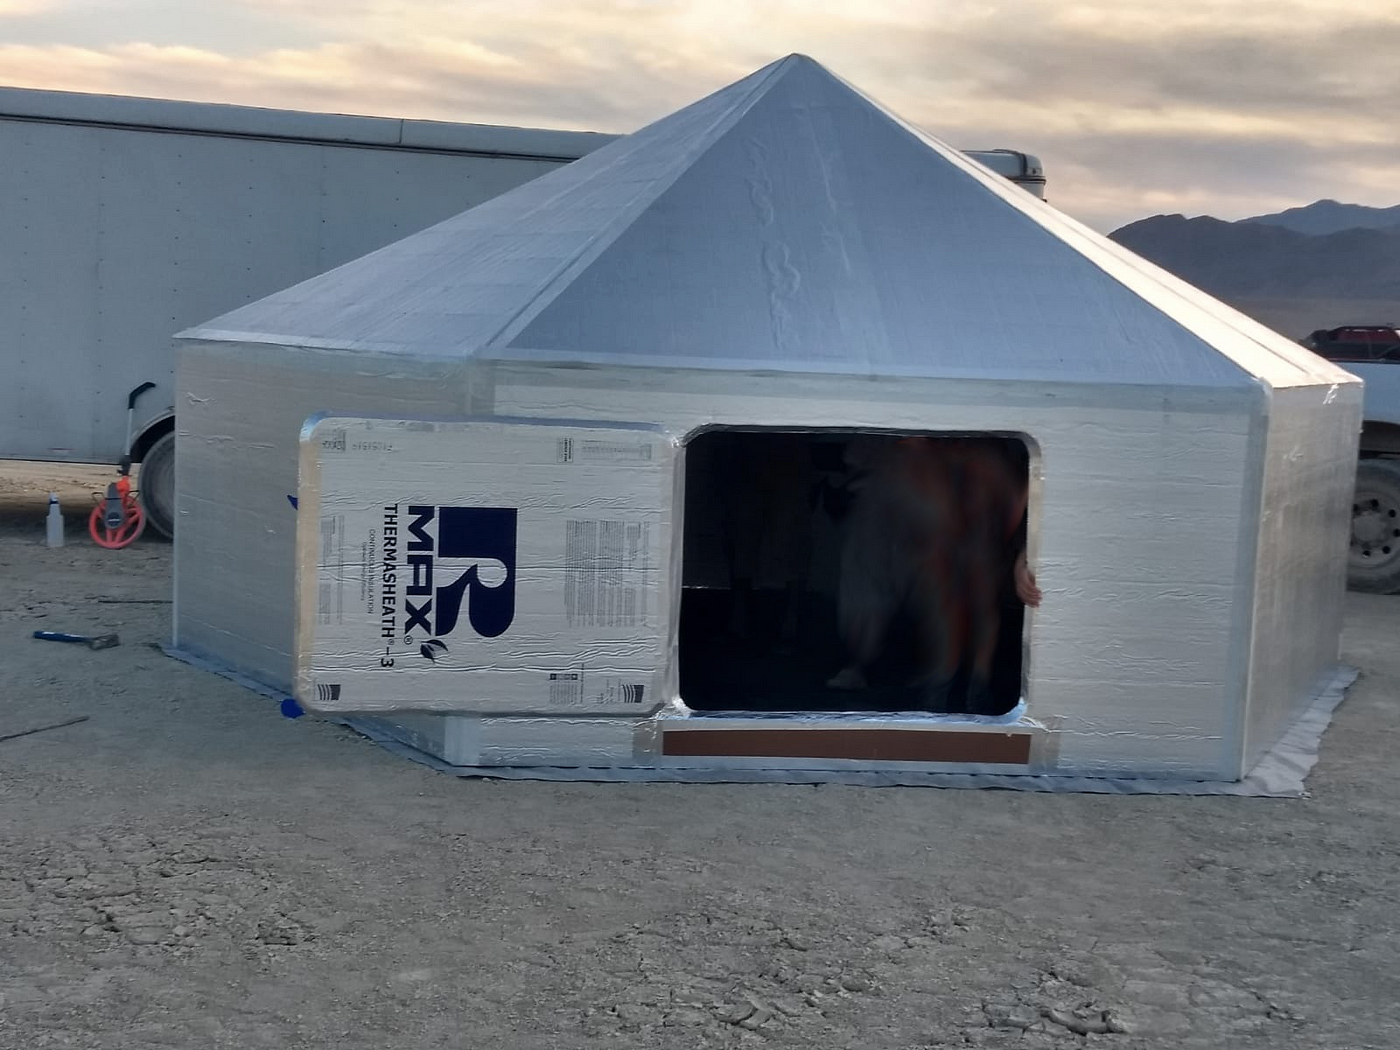 Burning Man Shade and Insulation